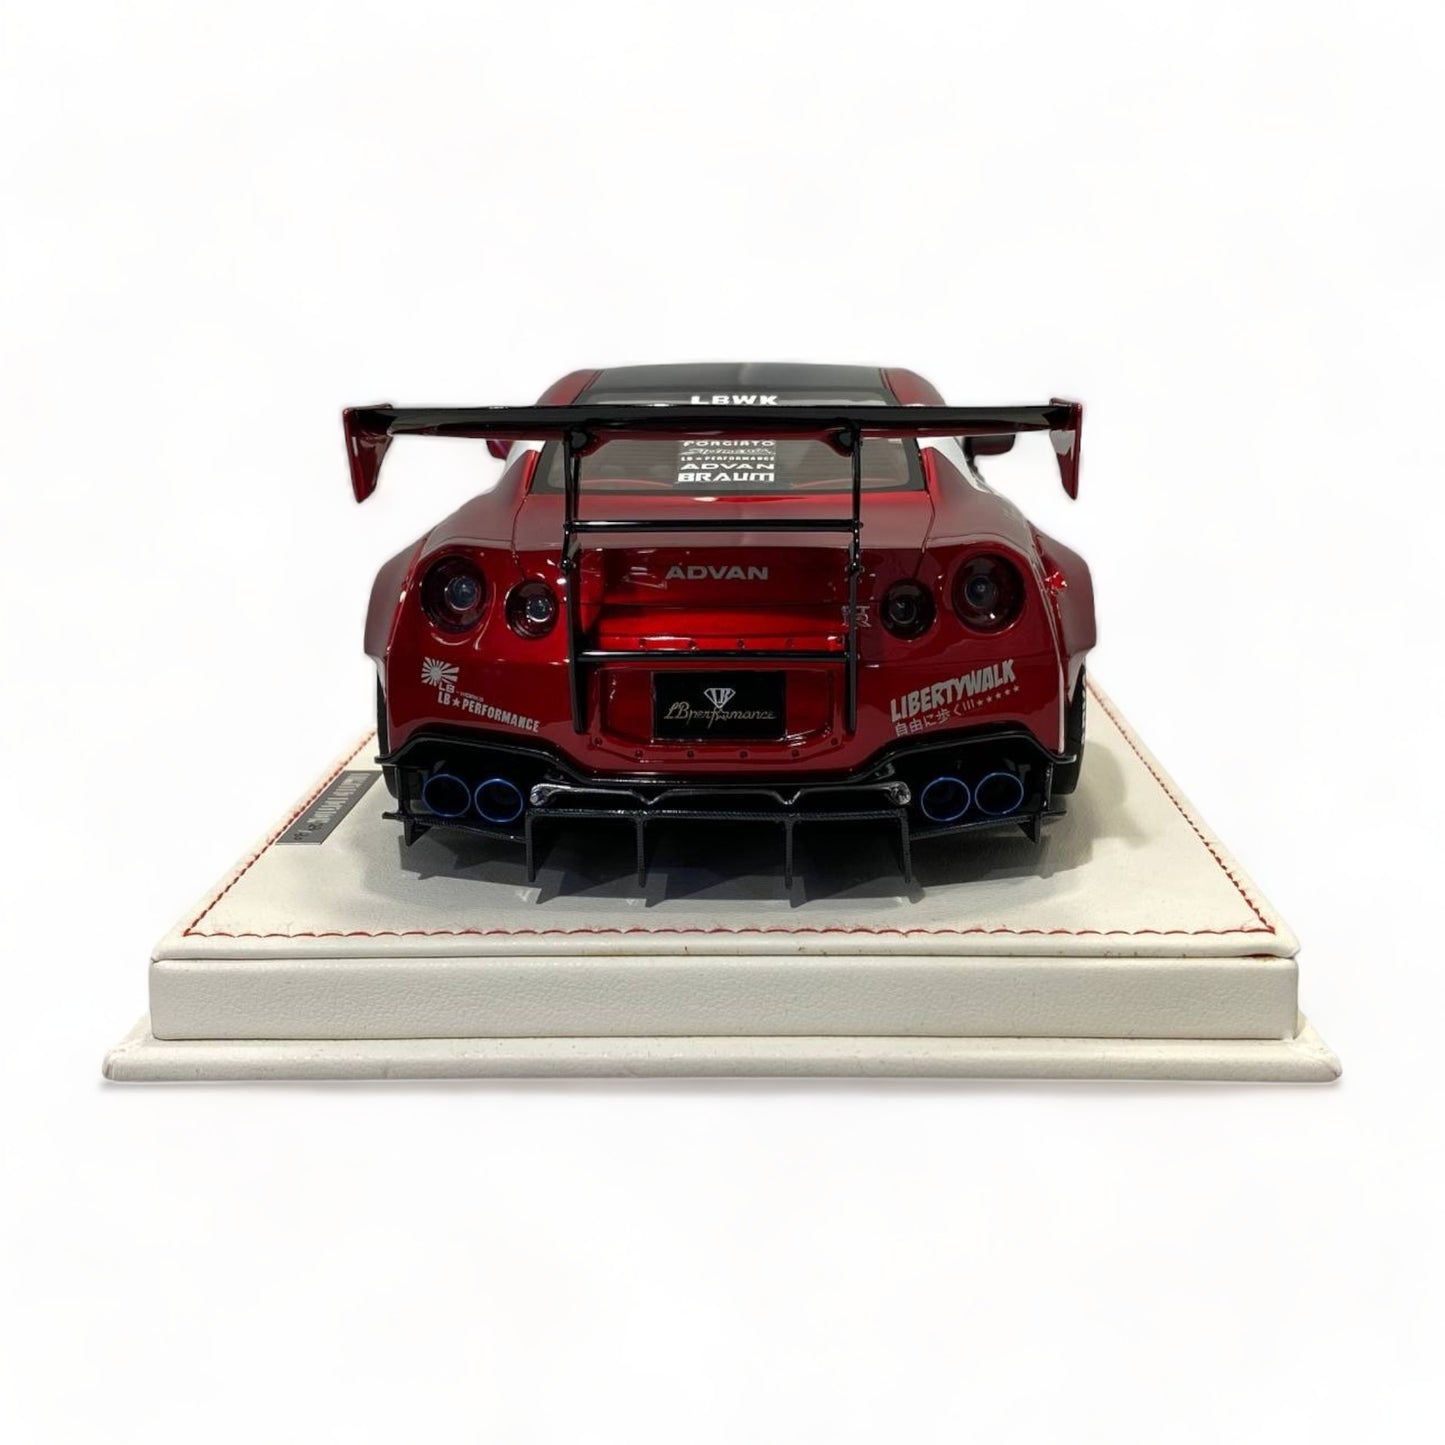 Nissan GT-R R35 LBWK LB*Performance Red & Carbon One Model